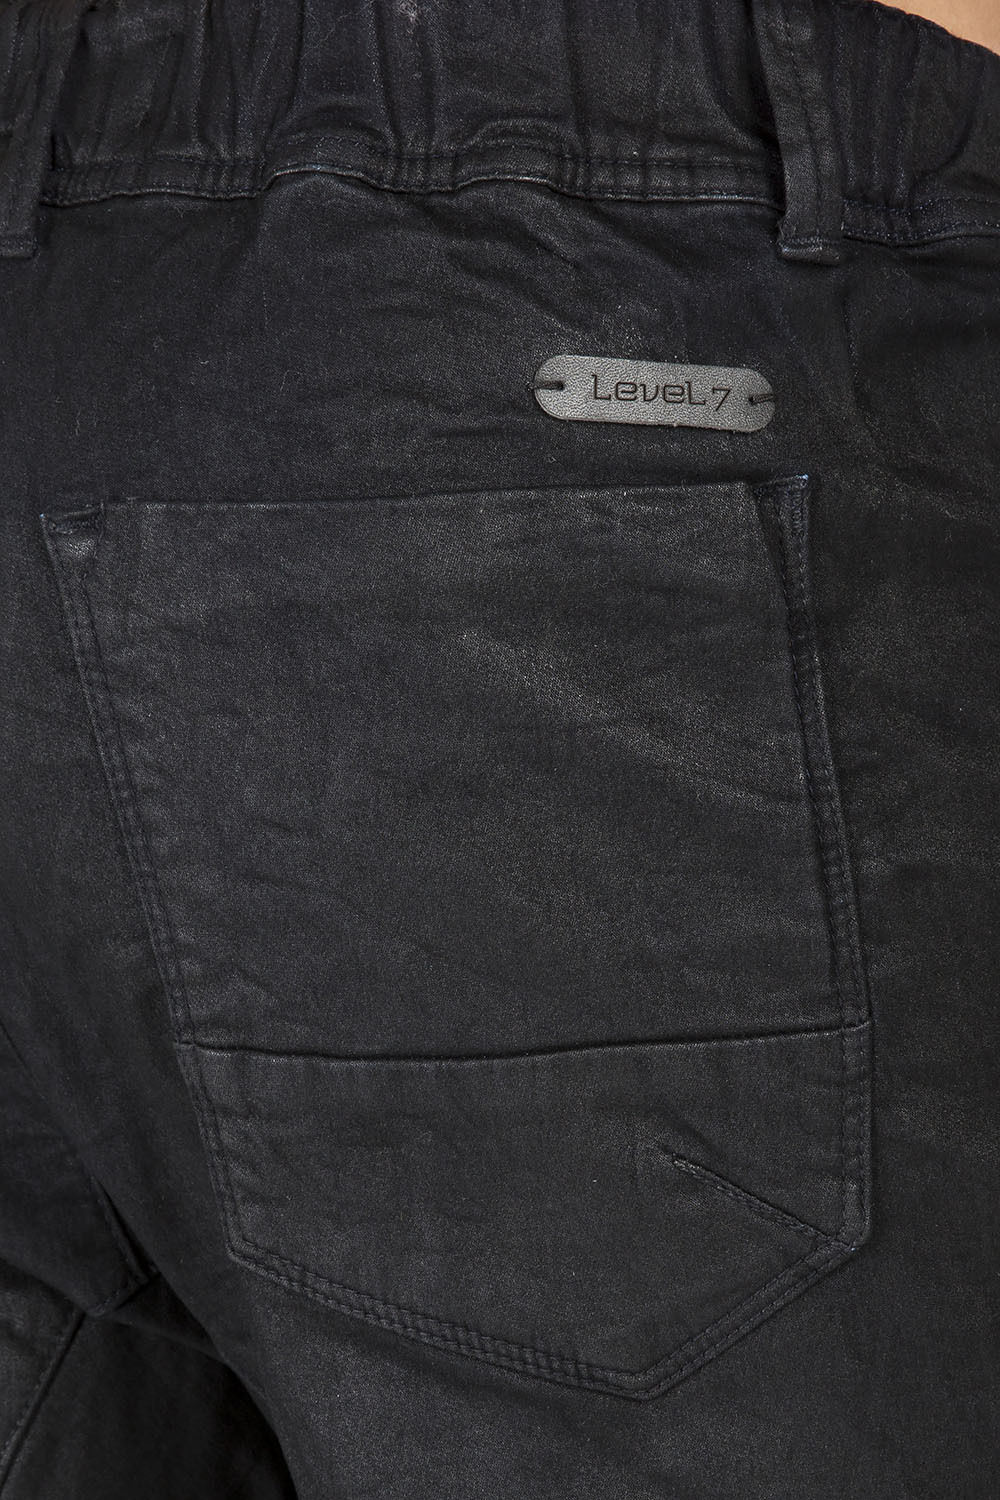 Dark Indigo Premium coated Knit Denim Jogger Jeans, Drop Crotch, Whiskering Wash